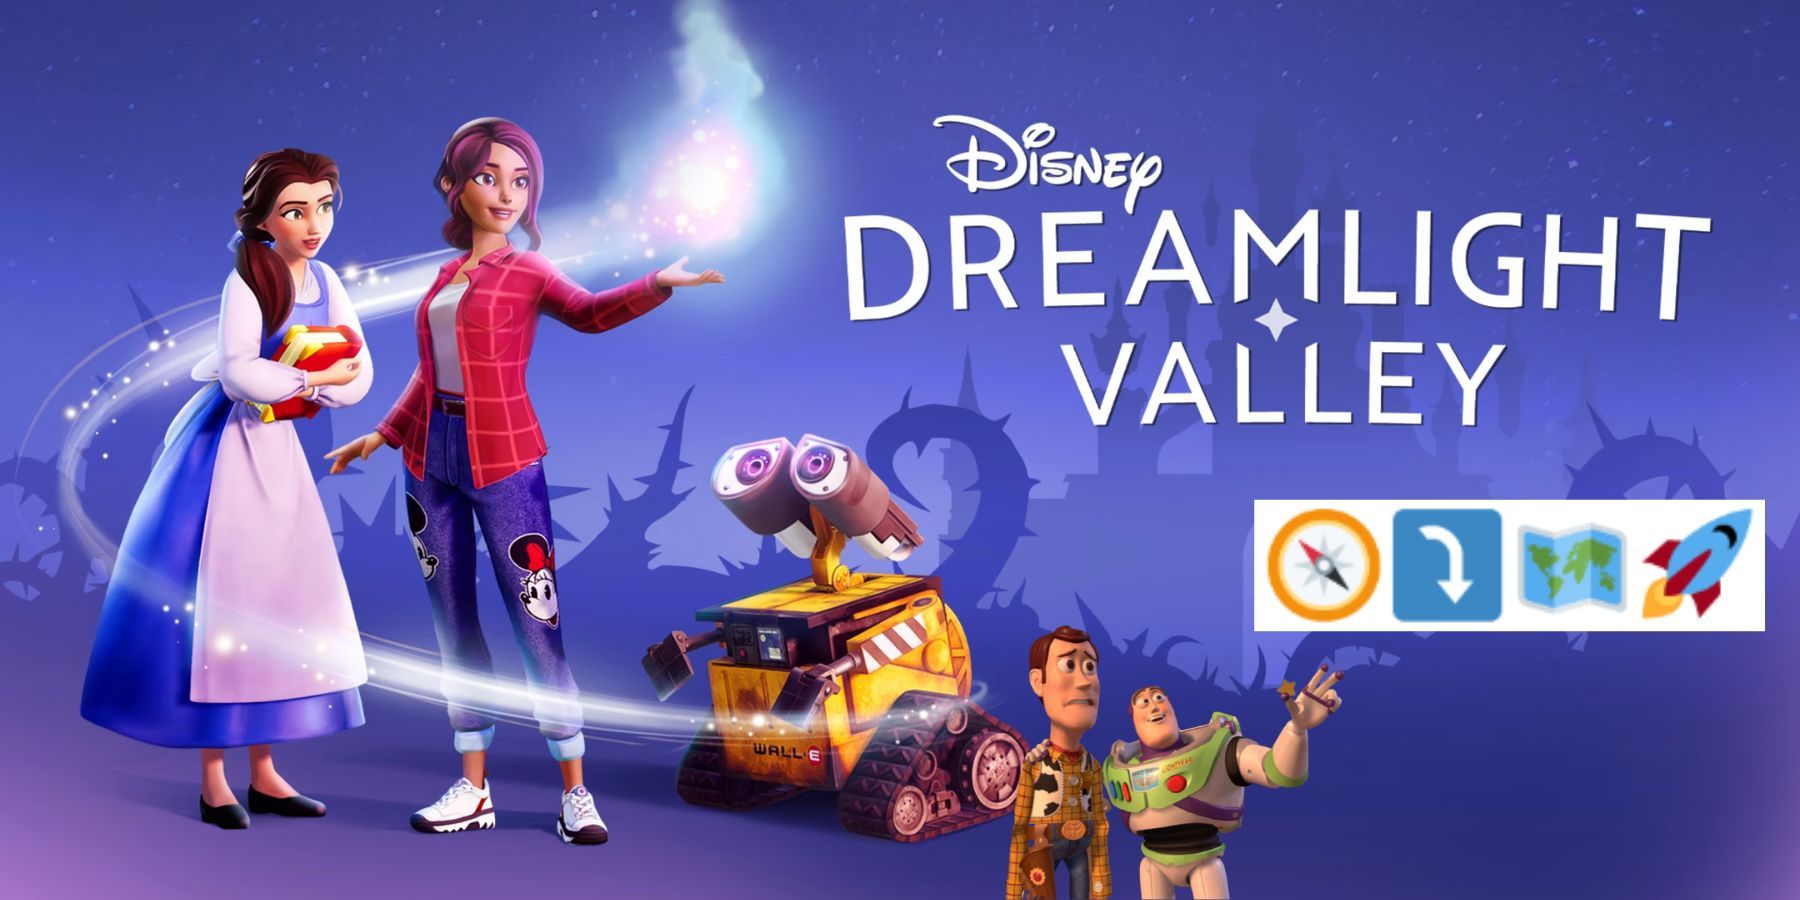 Disney Dreamlight Valley on X: #DisneyDreamlightValley Update 1